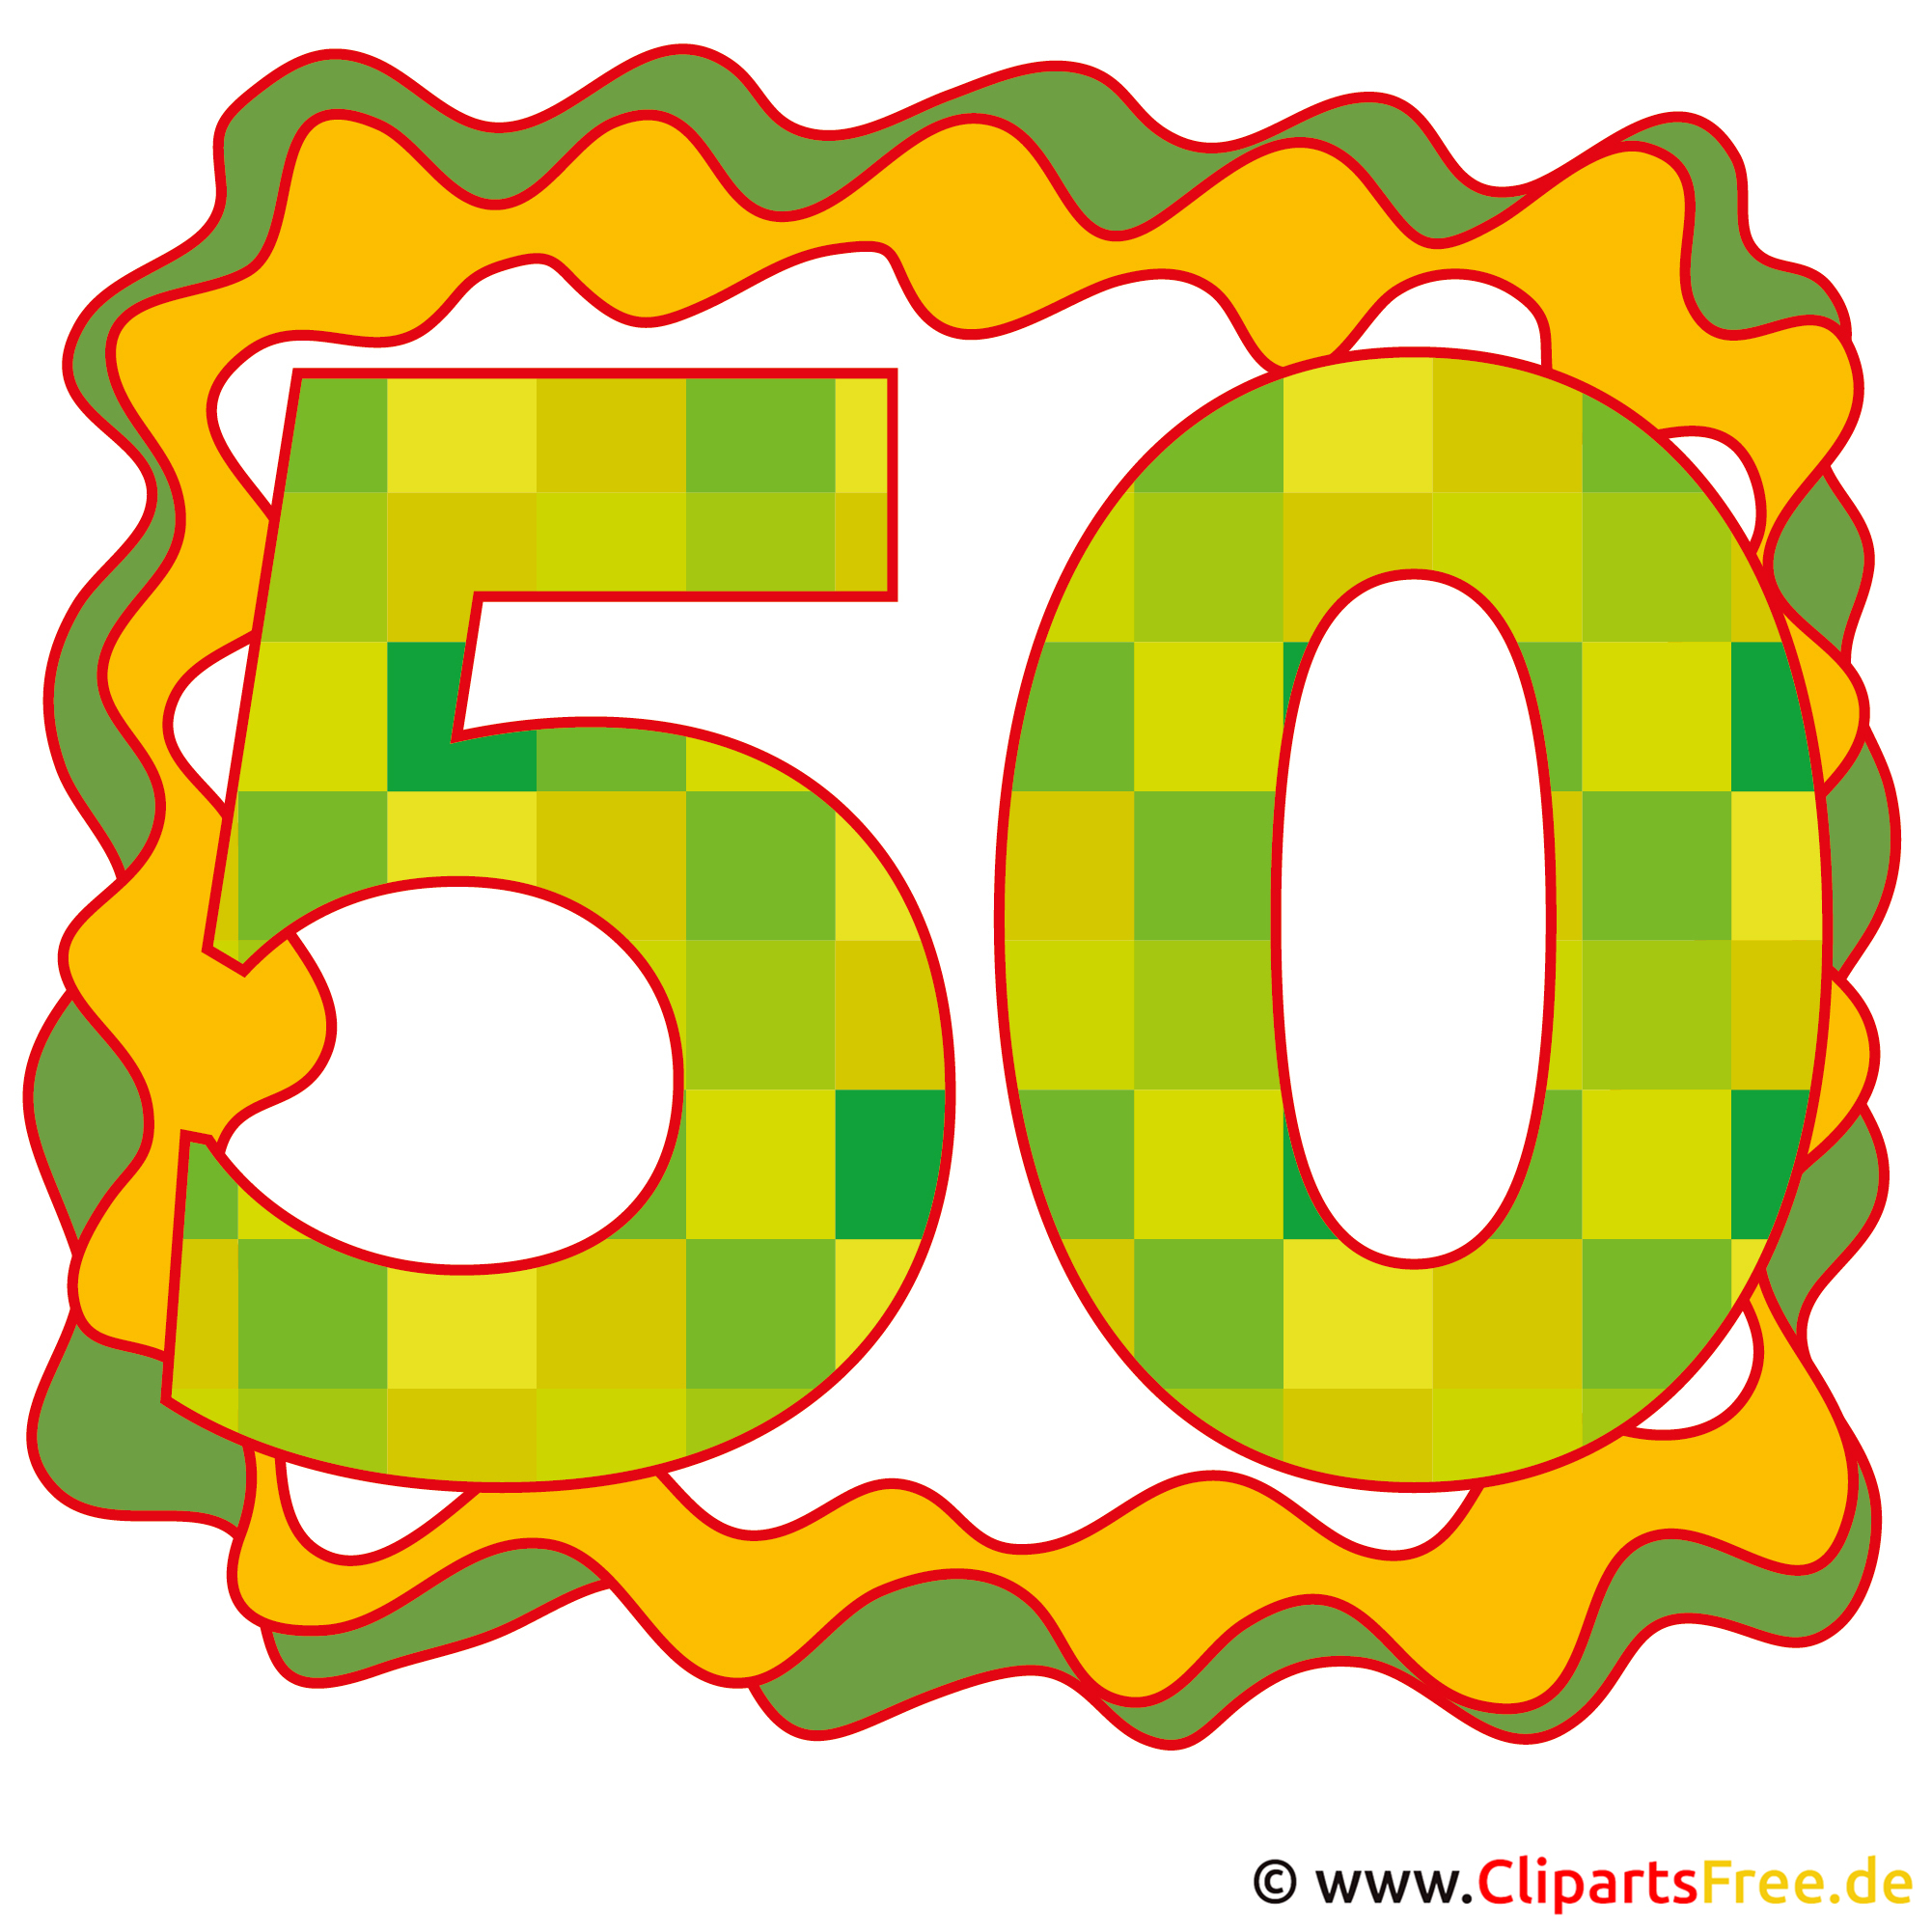 50 Jubläum-afbeelding, wenskaart, illustraties